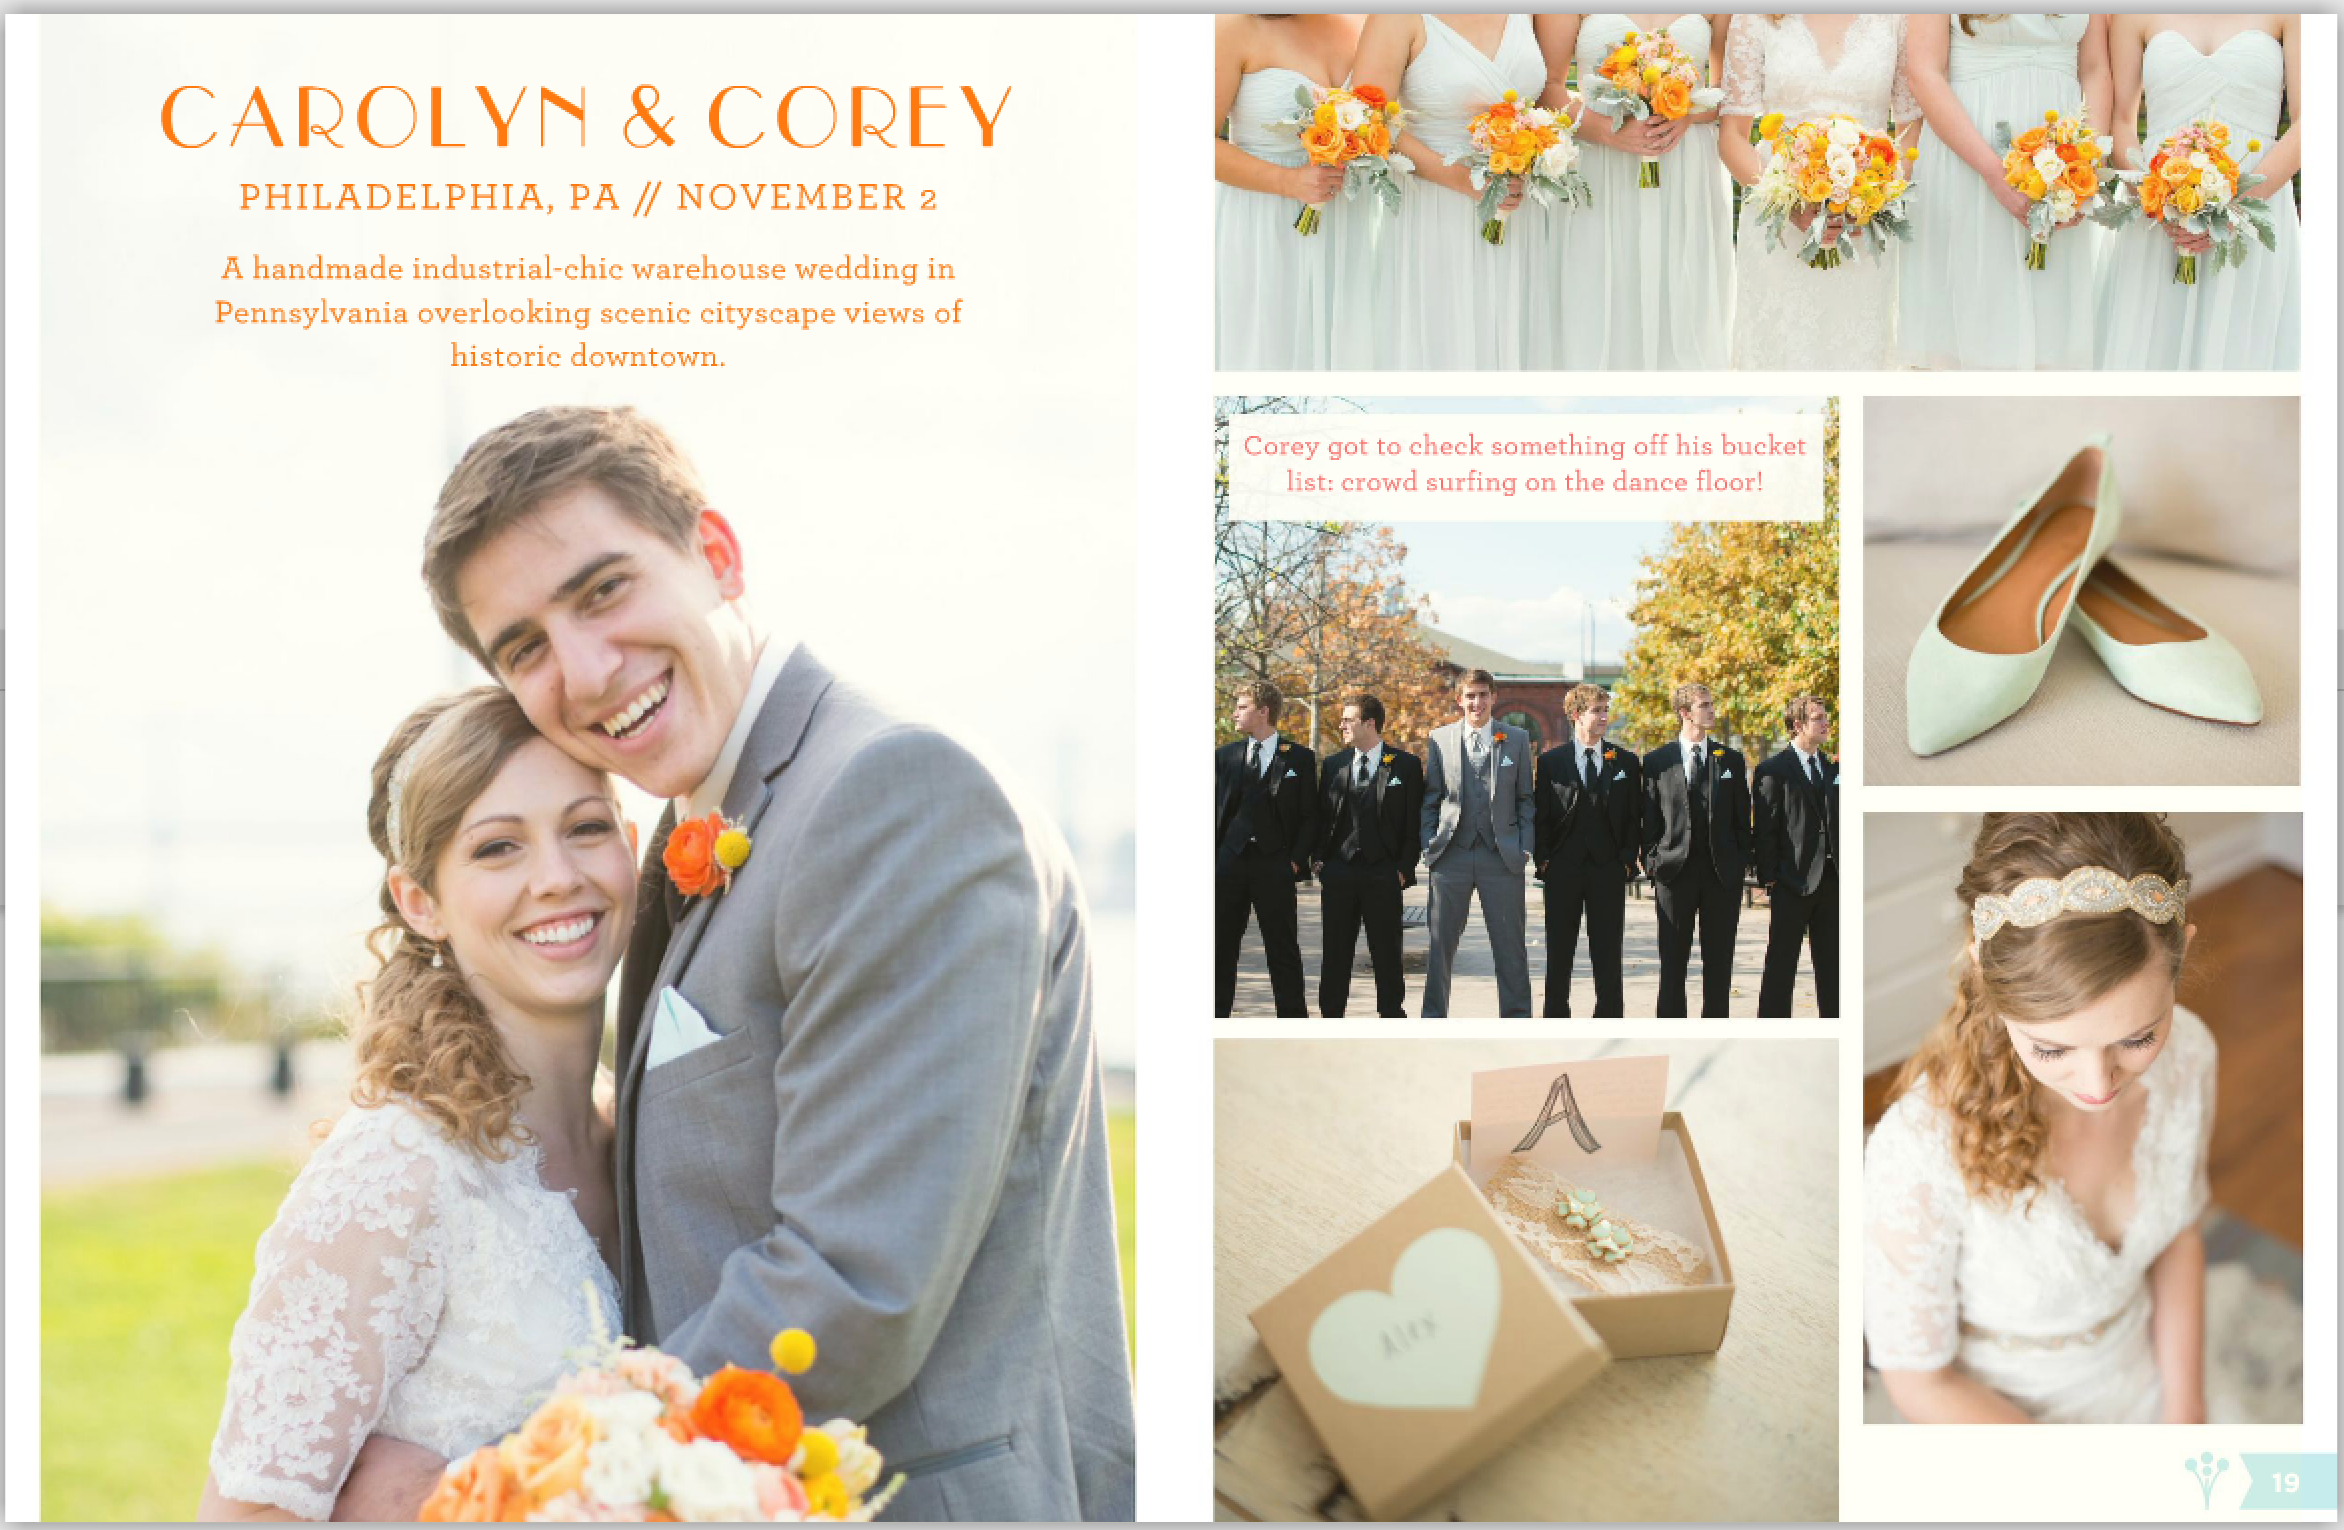 WeddingWire FallBook 2014 - Alison Dunn Photography Feature - Philadelphia Wedding photo